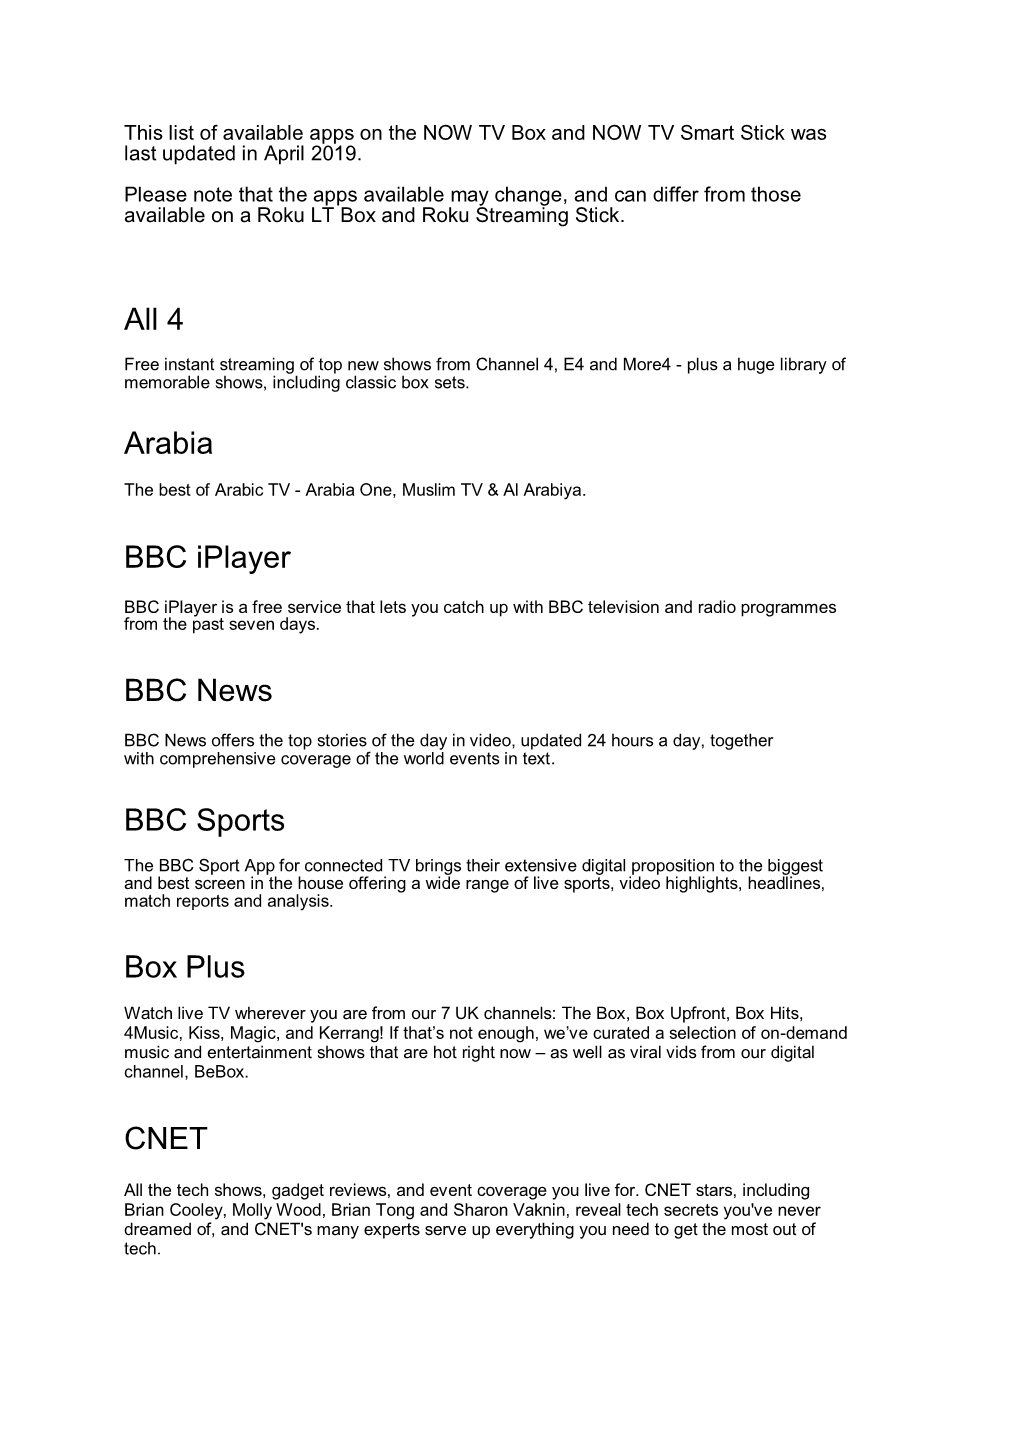 All 4 Arabia BBC Iplayer BBC News BBC Sports Box Plus CNET